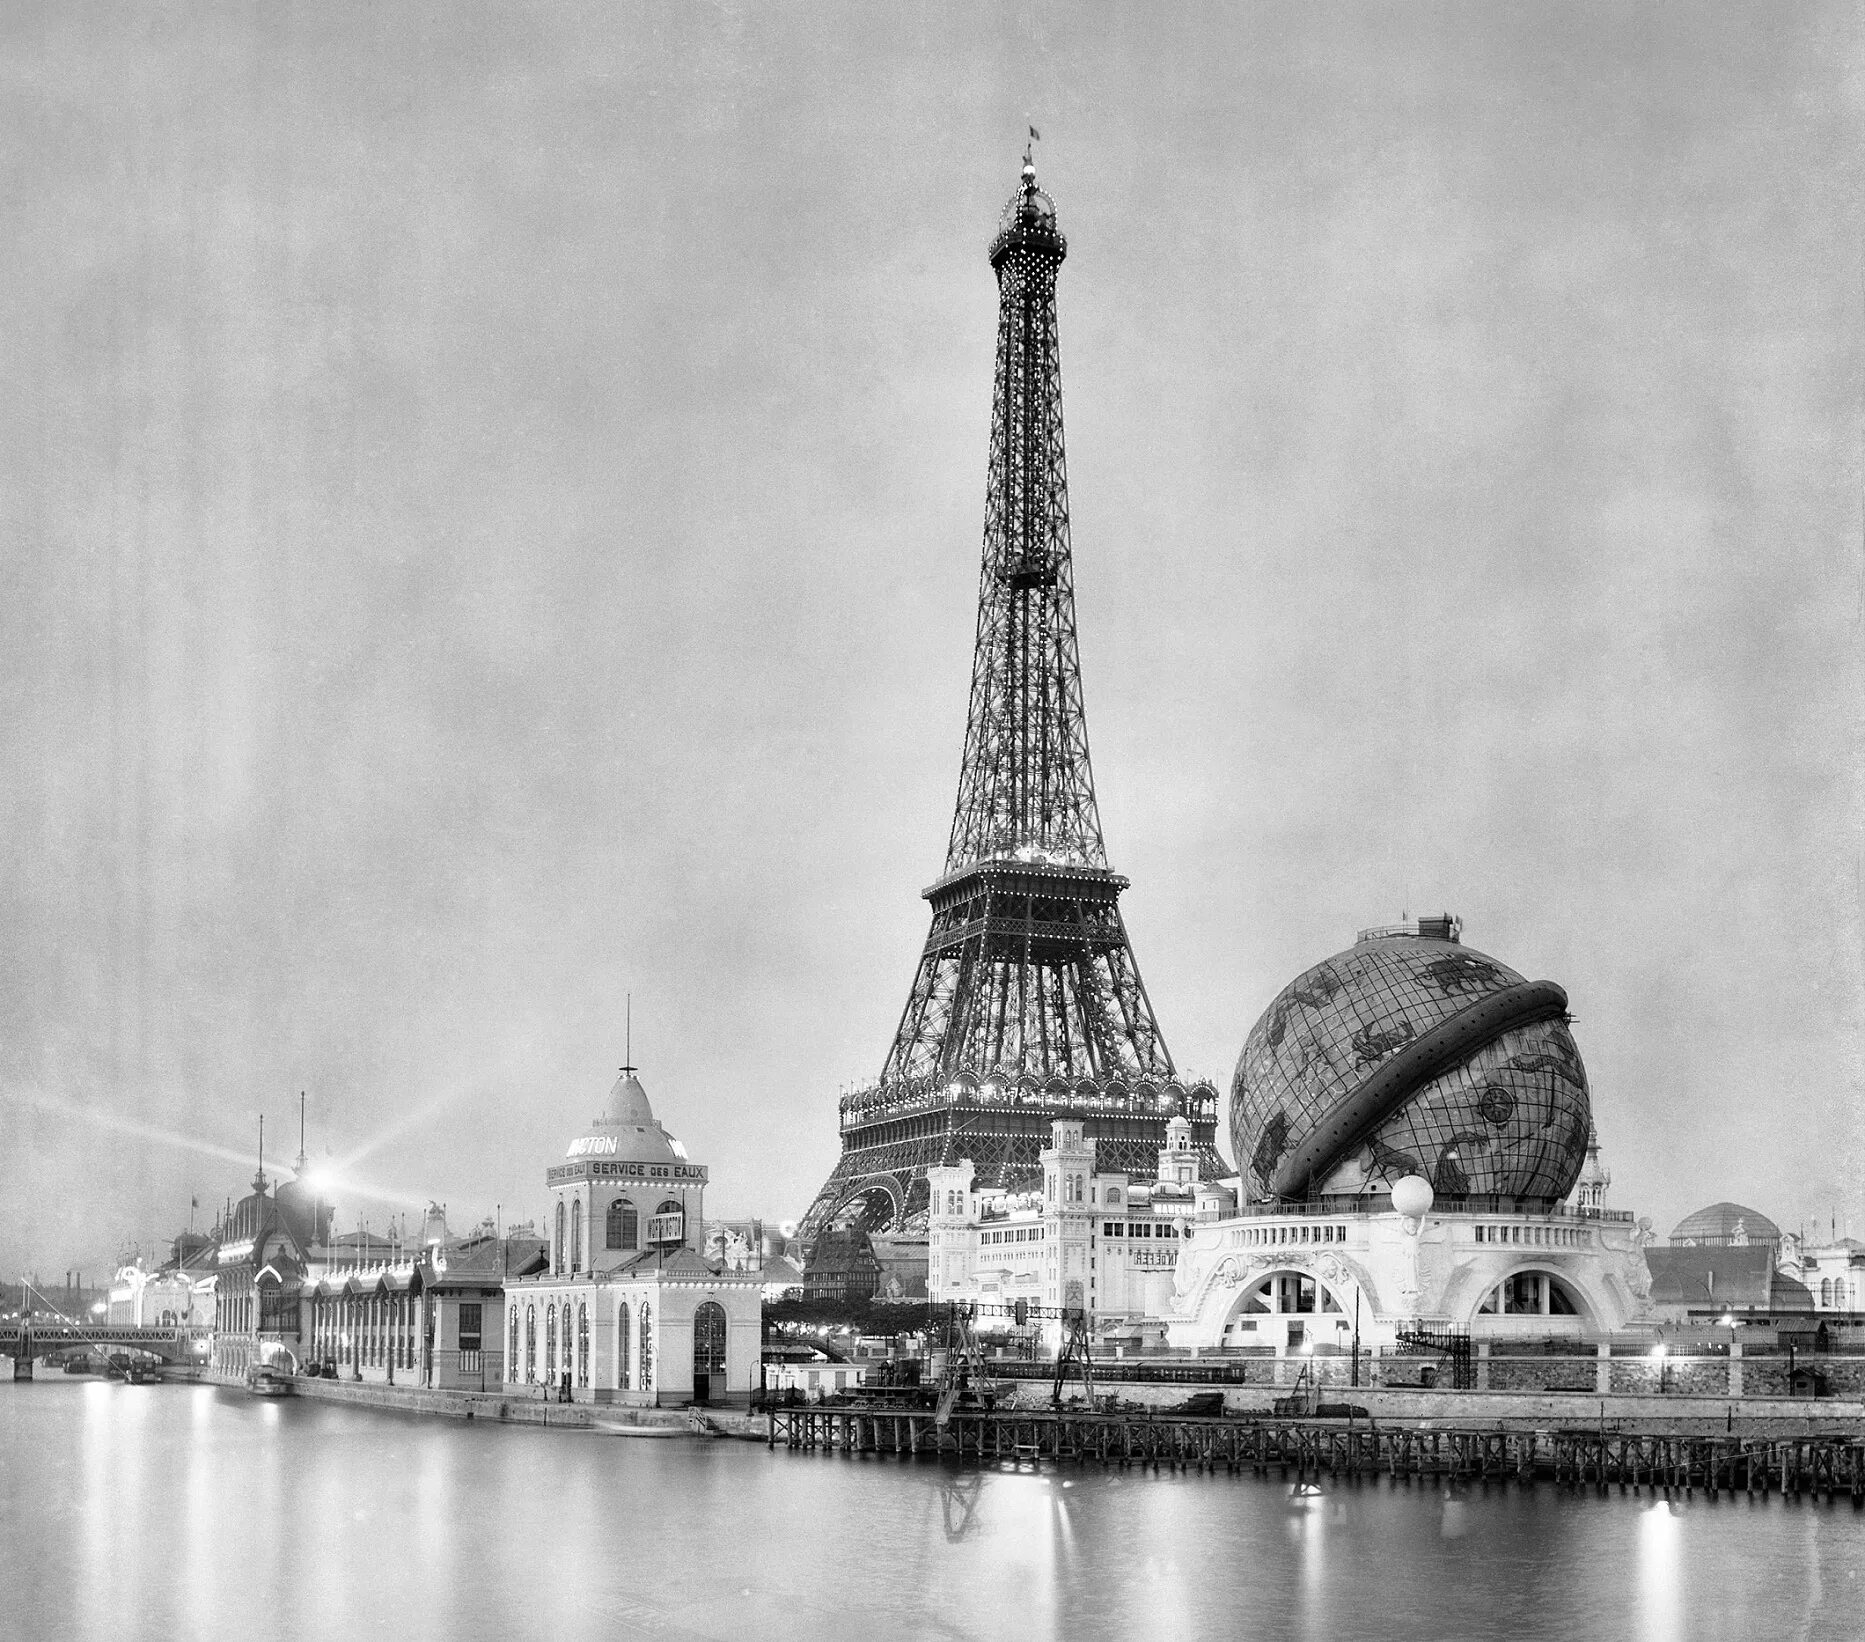 Париж 19 век Эйфелева башня. Эйфелева башня 20 век. Эйфелева башня в Париже 1889 год. Франция 20 век Эйфелева башня. Франция 1800